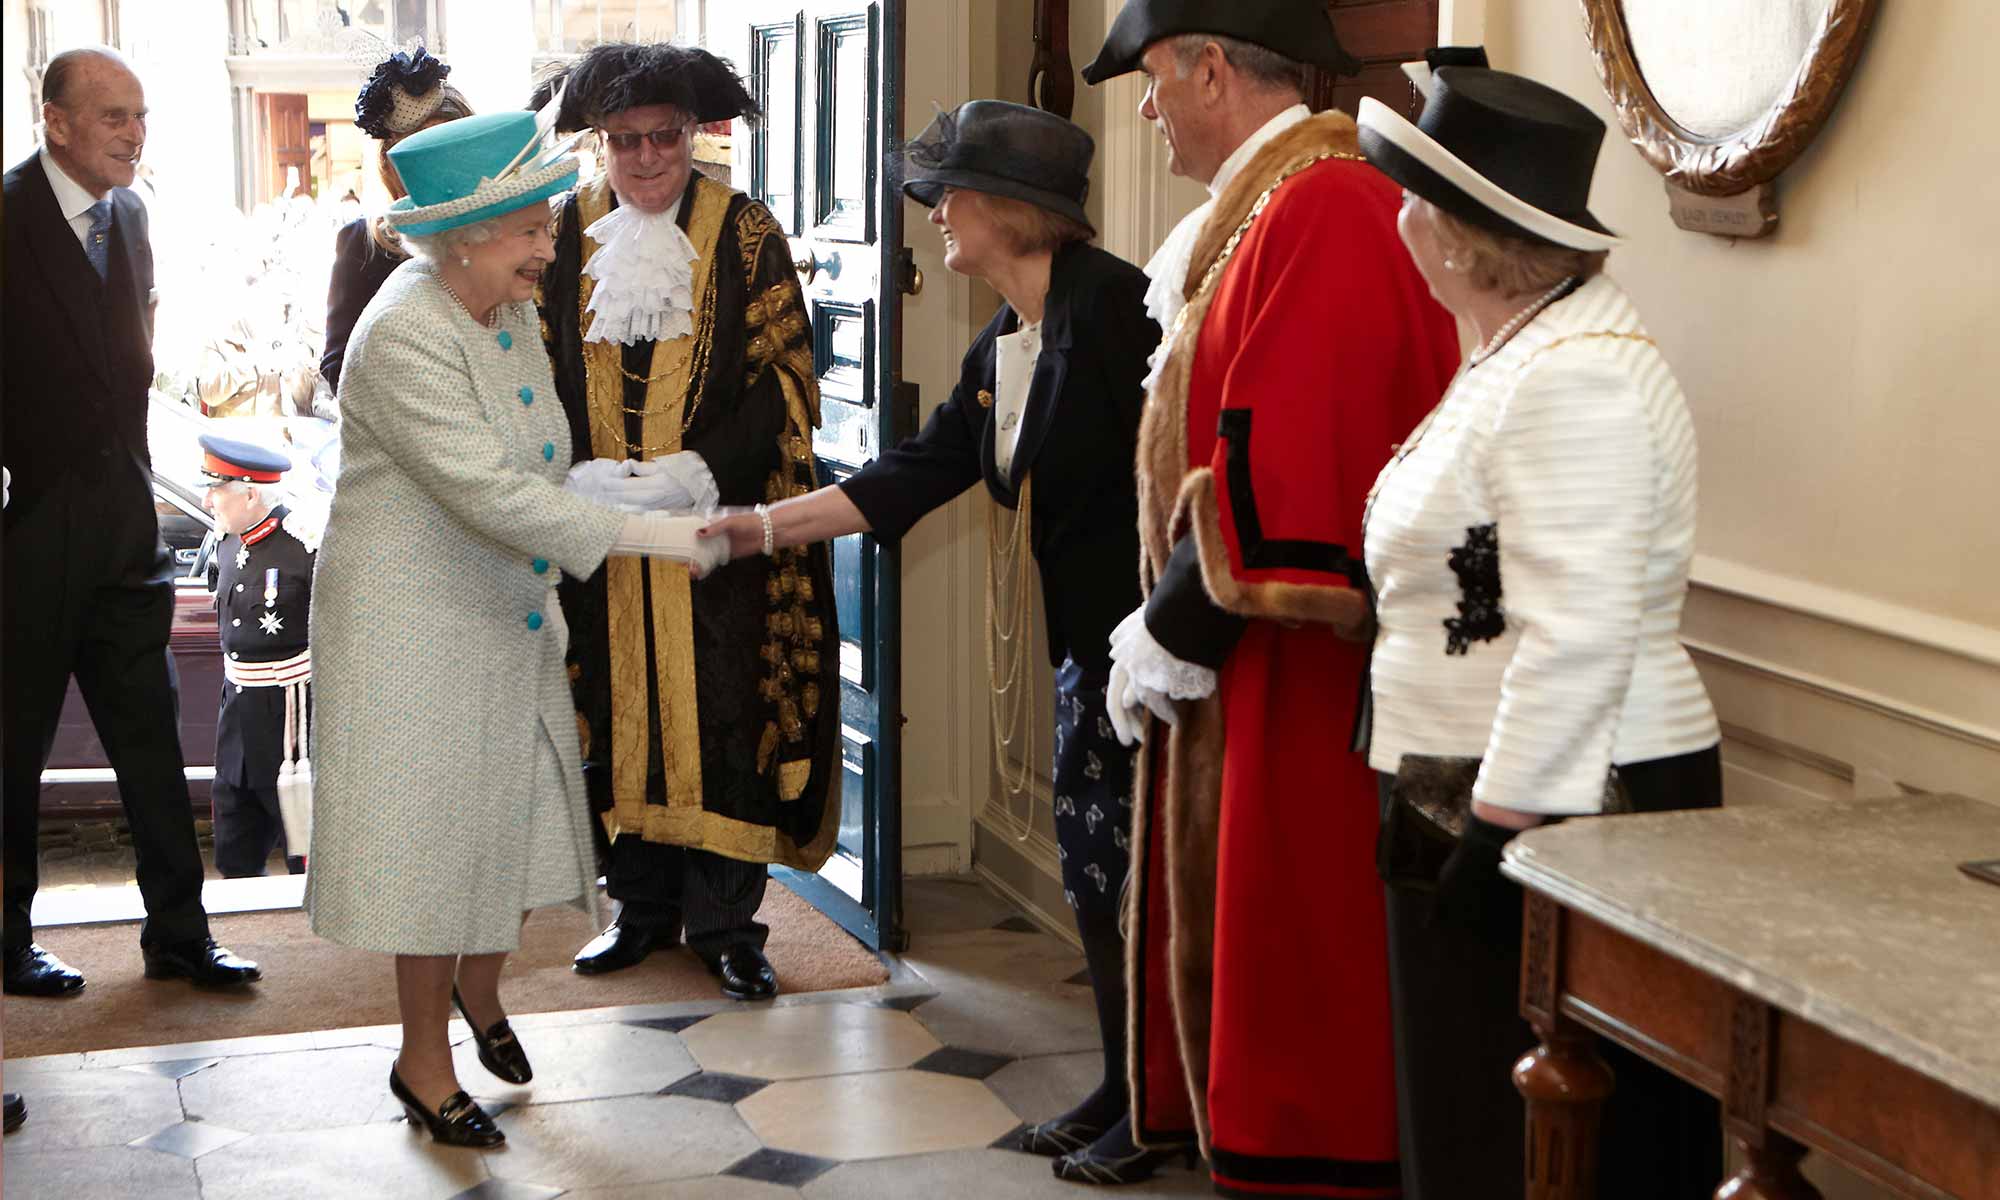 Queen Elizabeth II meeting the Civic party.